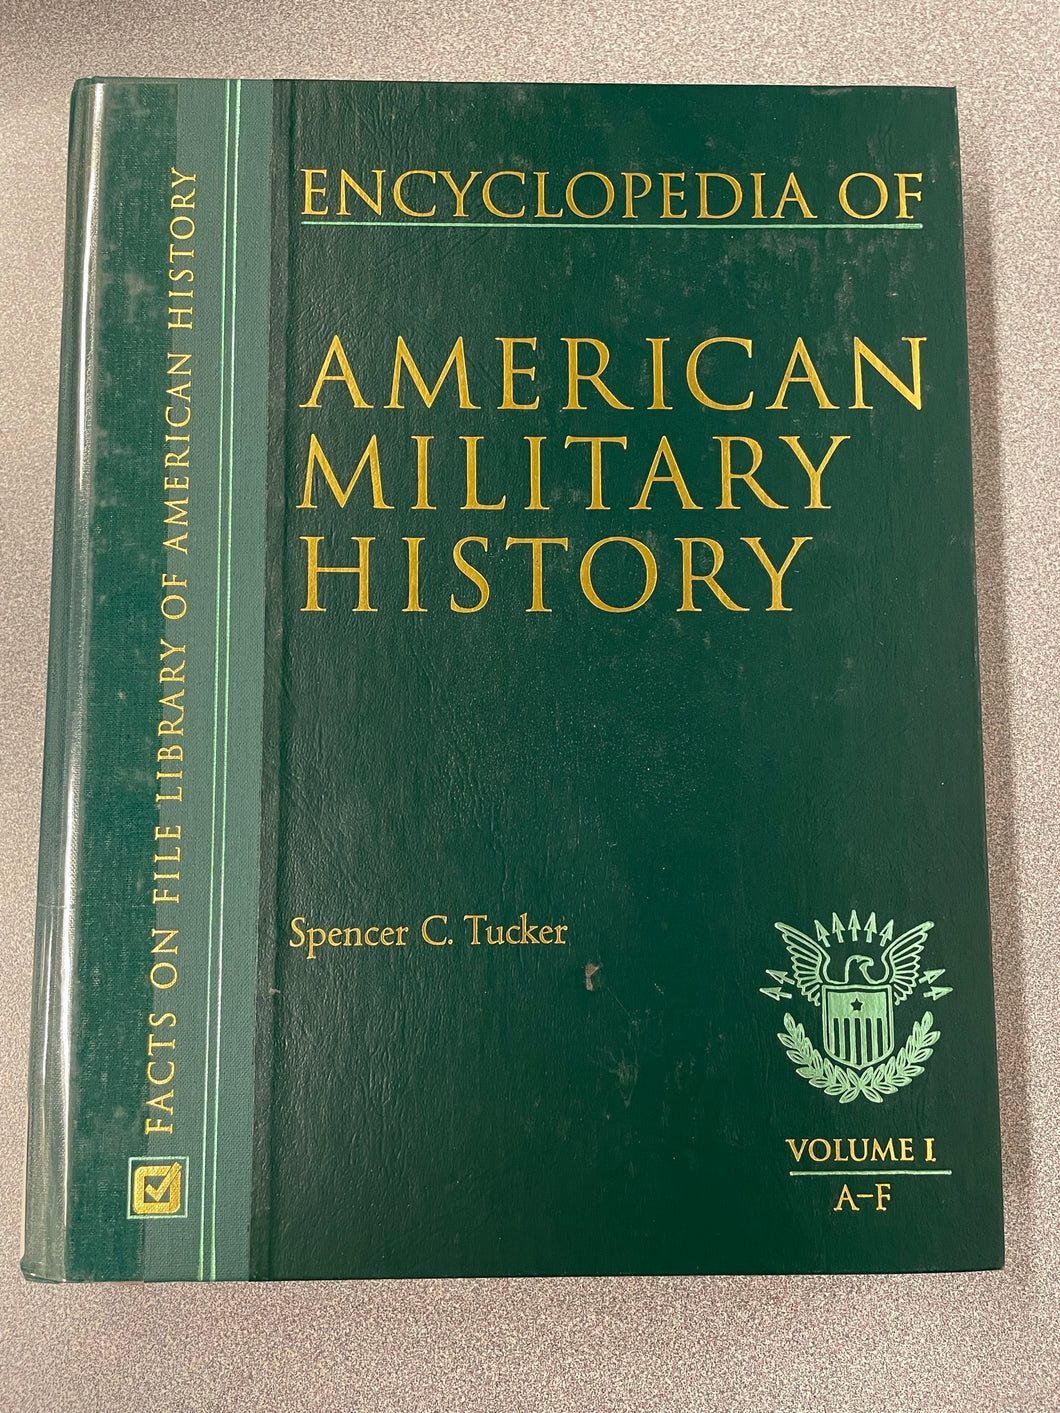 Encyclopedia of American Military History, Tucker, Spencer C., ed. [2003] SS 6/23